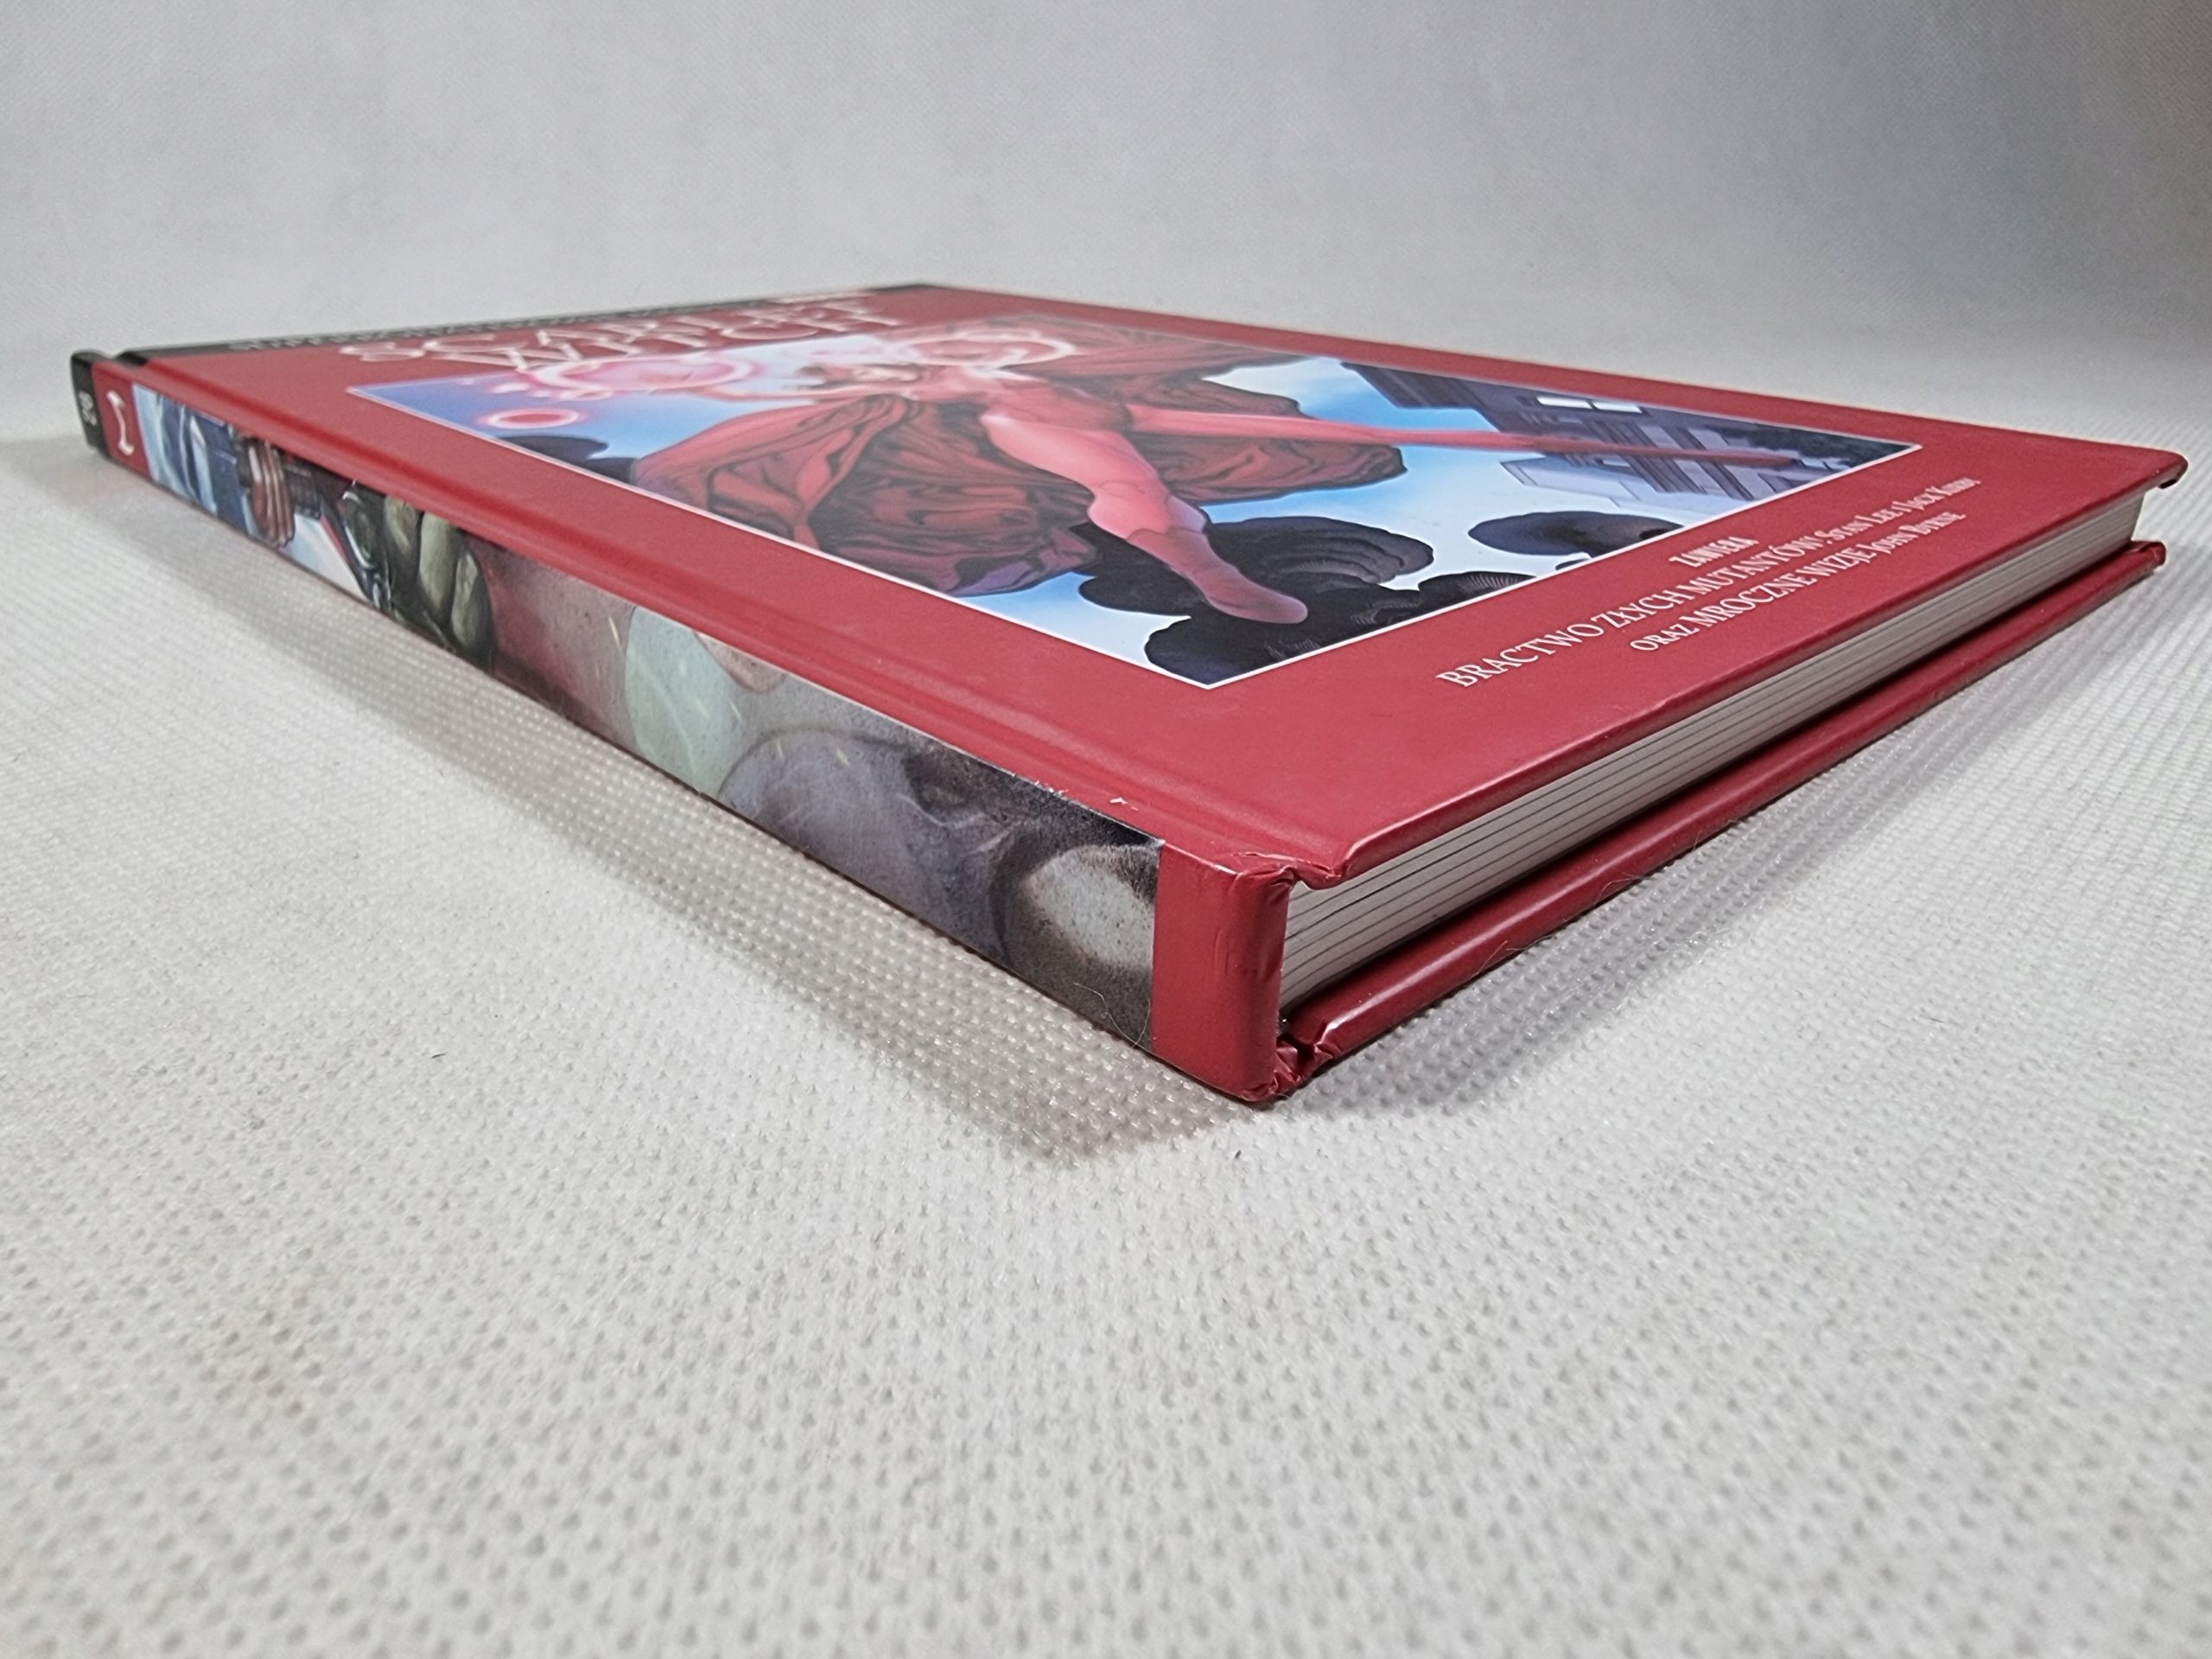 Scarlet Witch / Superbohaterowie Marvela Tom 26 / Kolekcja Hachette